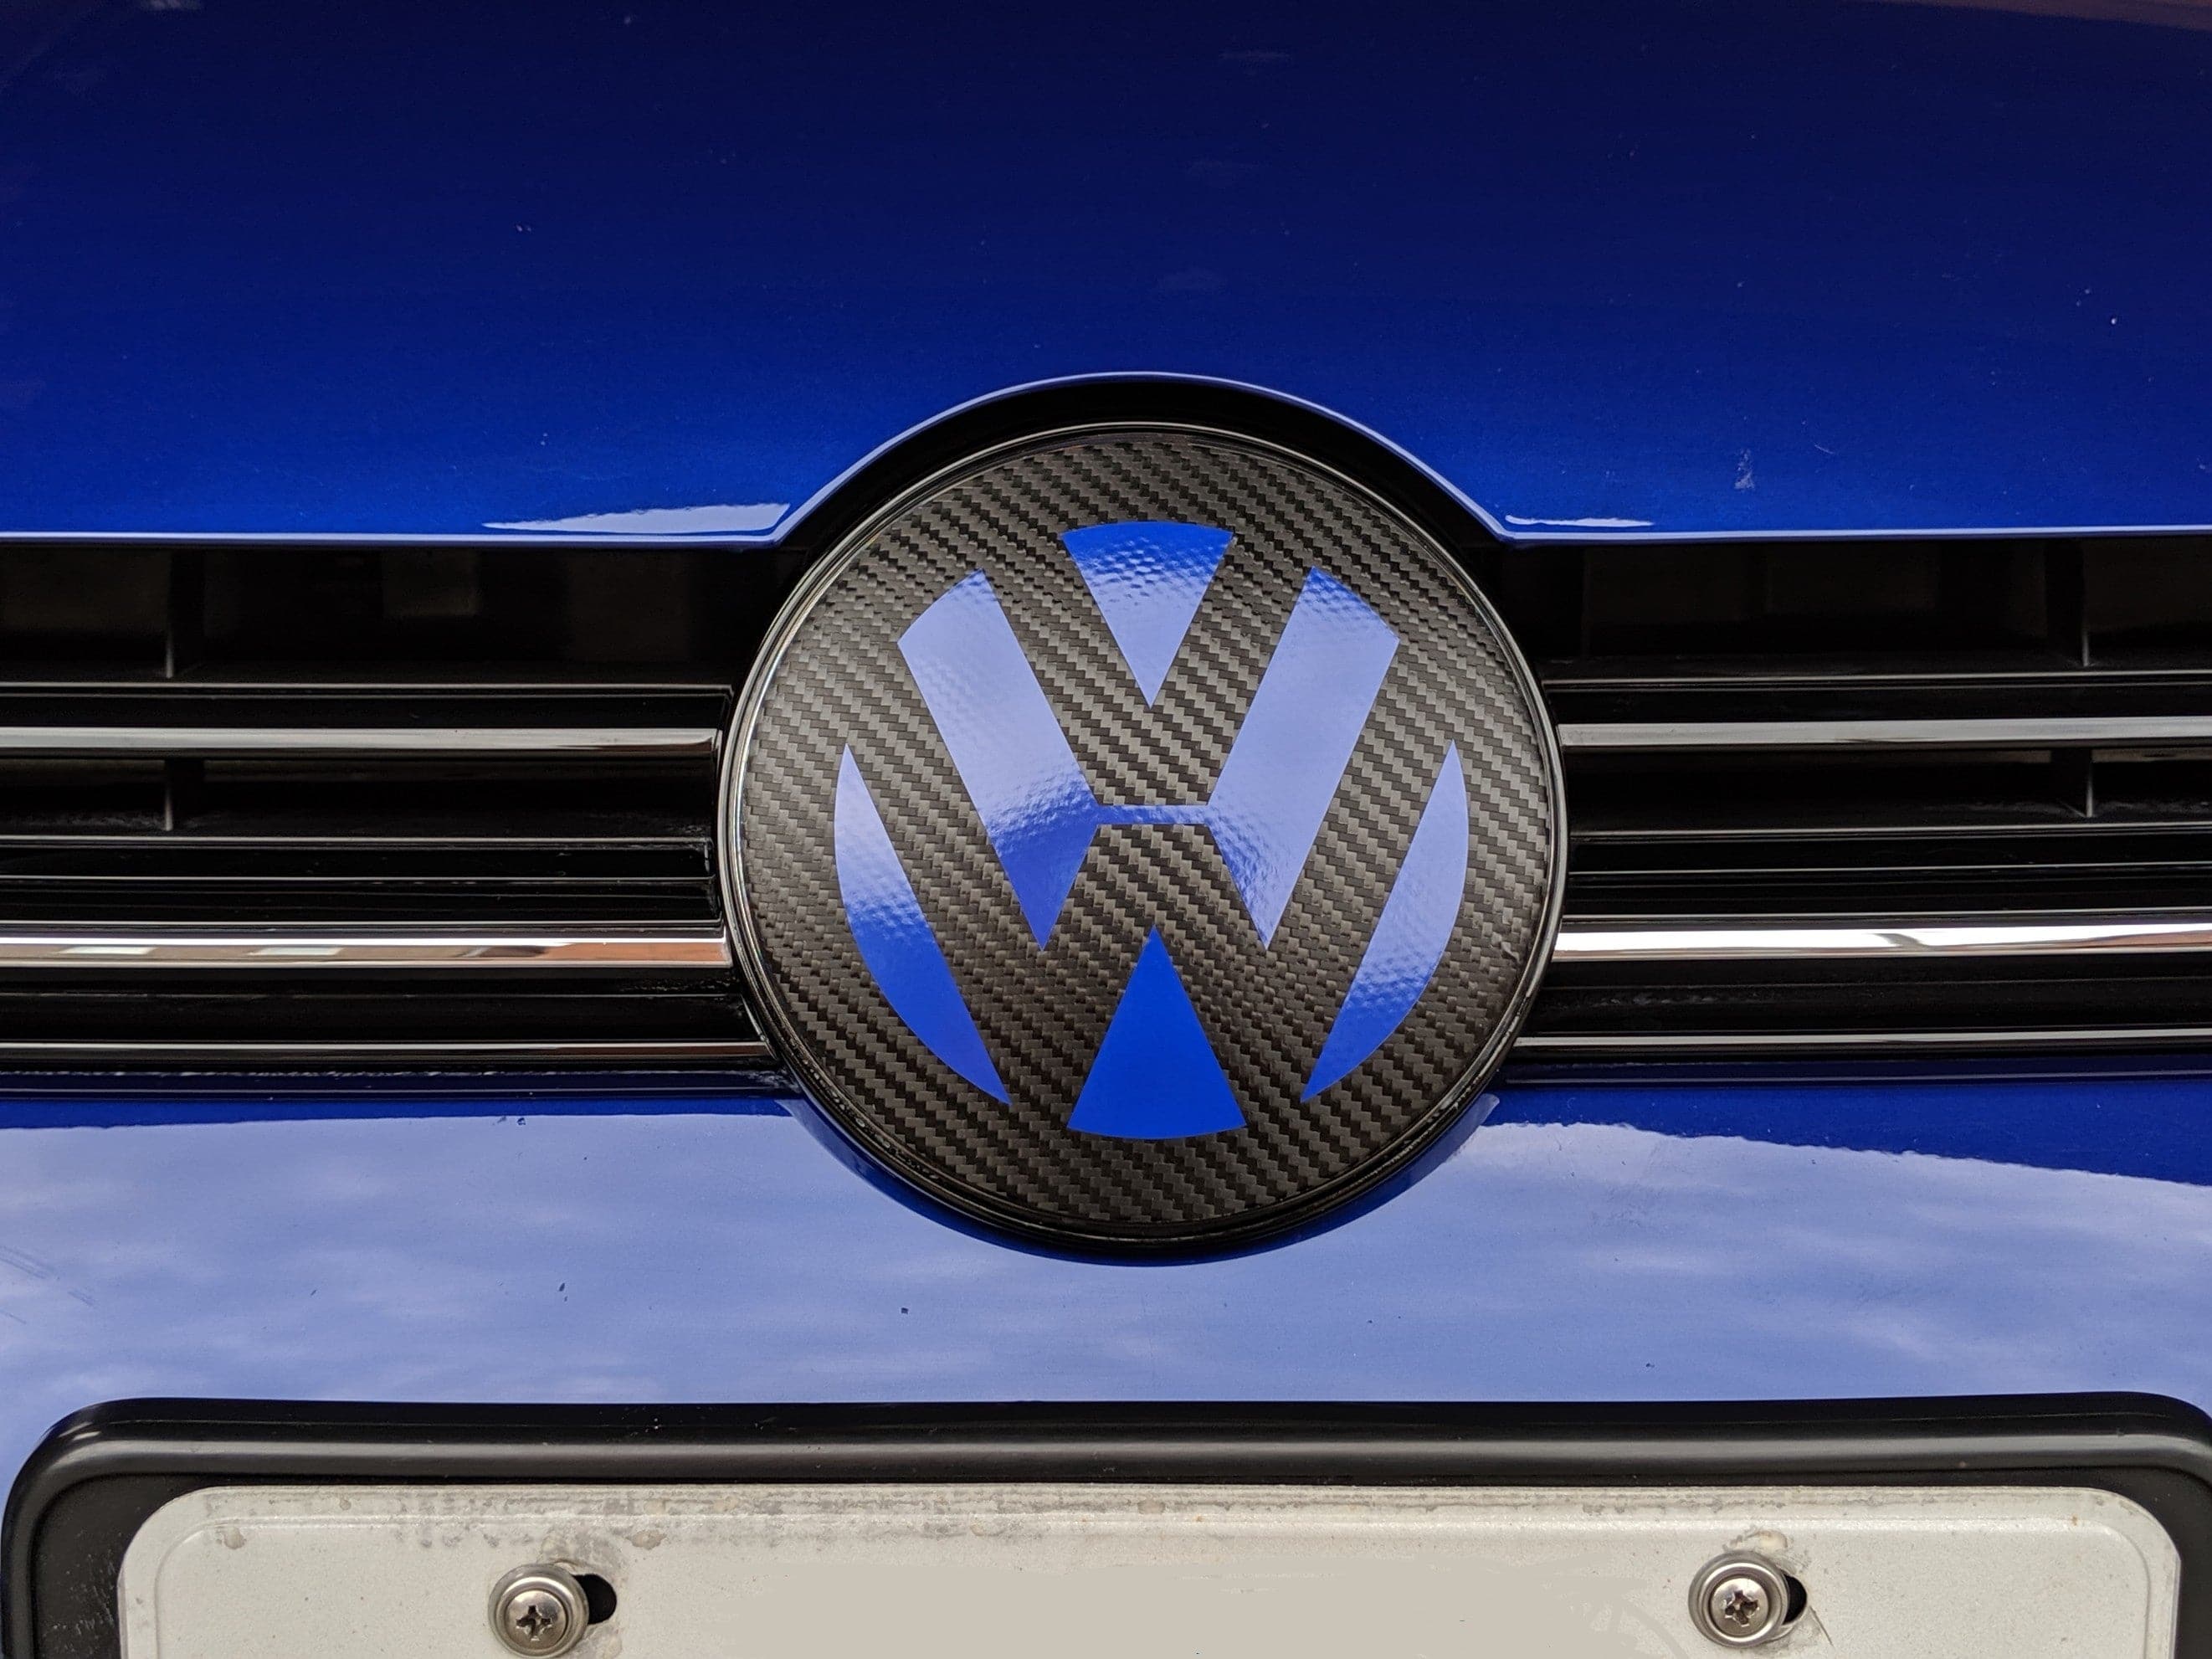 1 Schlüsselfolie in Carbonoptik VW Golf 8 GTI inkl. GTI Logo